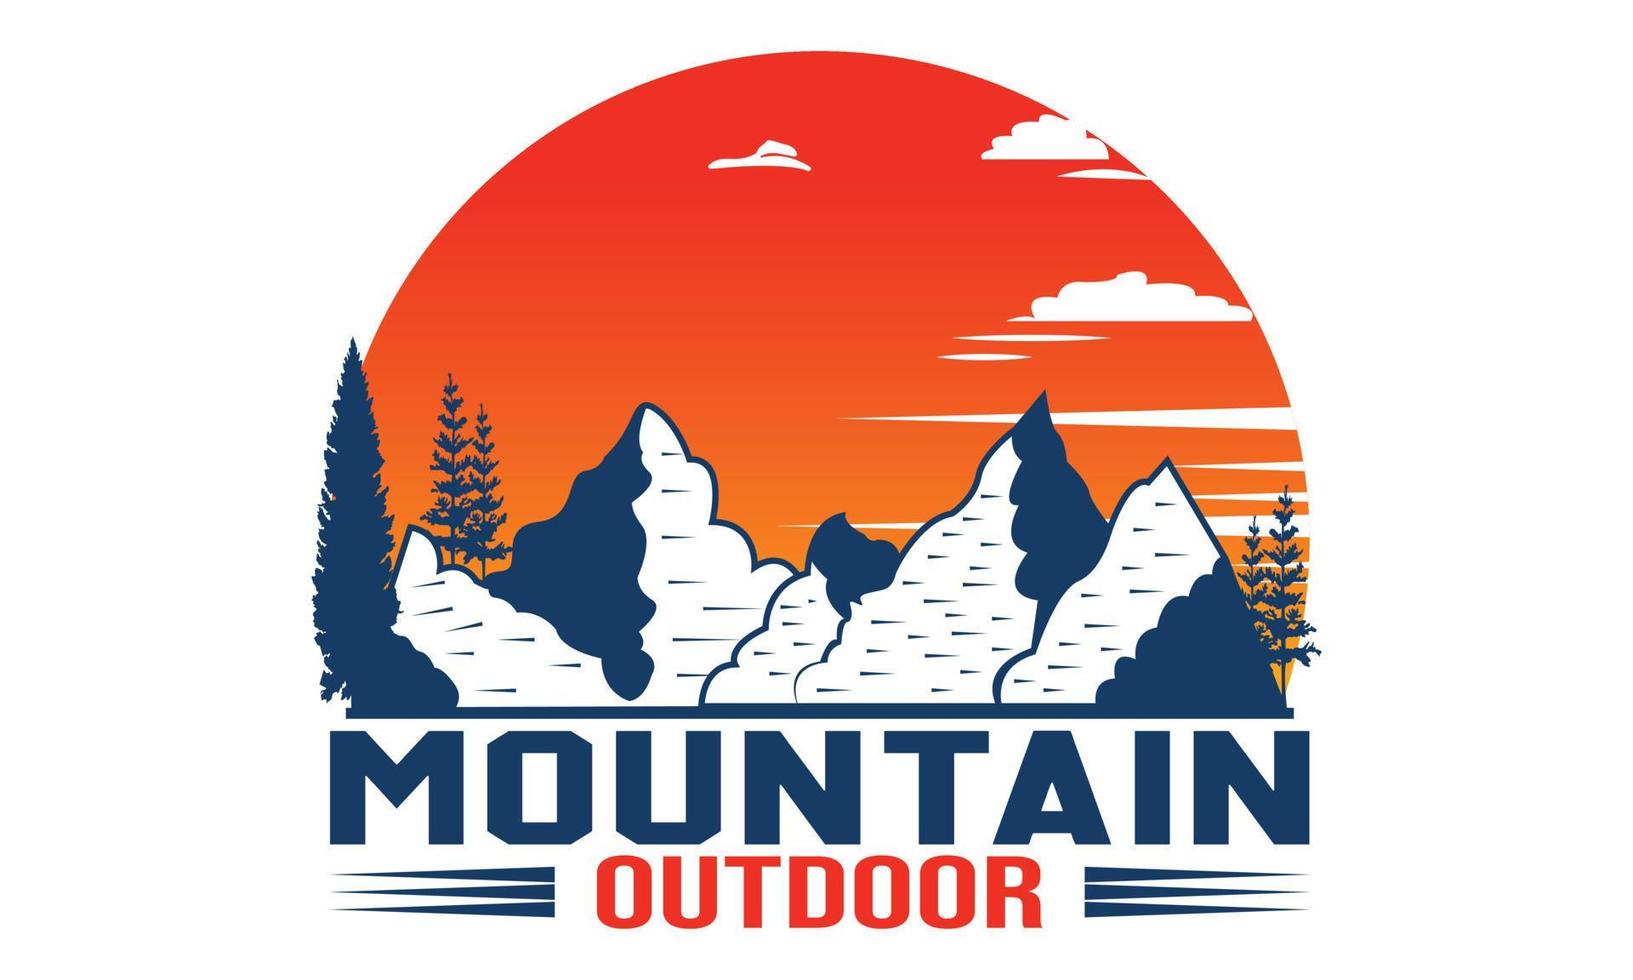 Mountain Adventure Typography t-shirt design. Motivational Mountain Adventure Typography t-shirt Creative Kids, and Mountain Theme Vector Illustration.